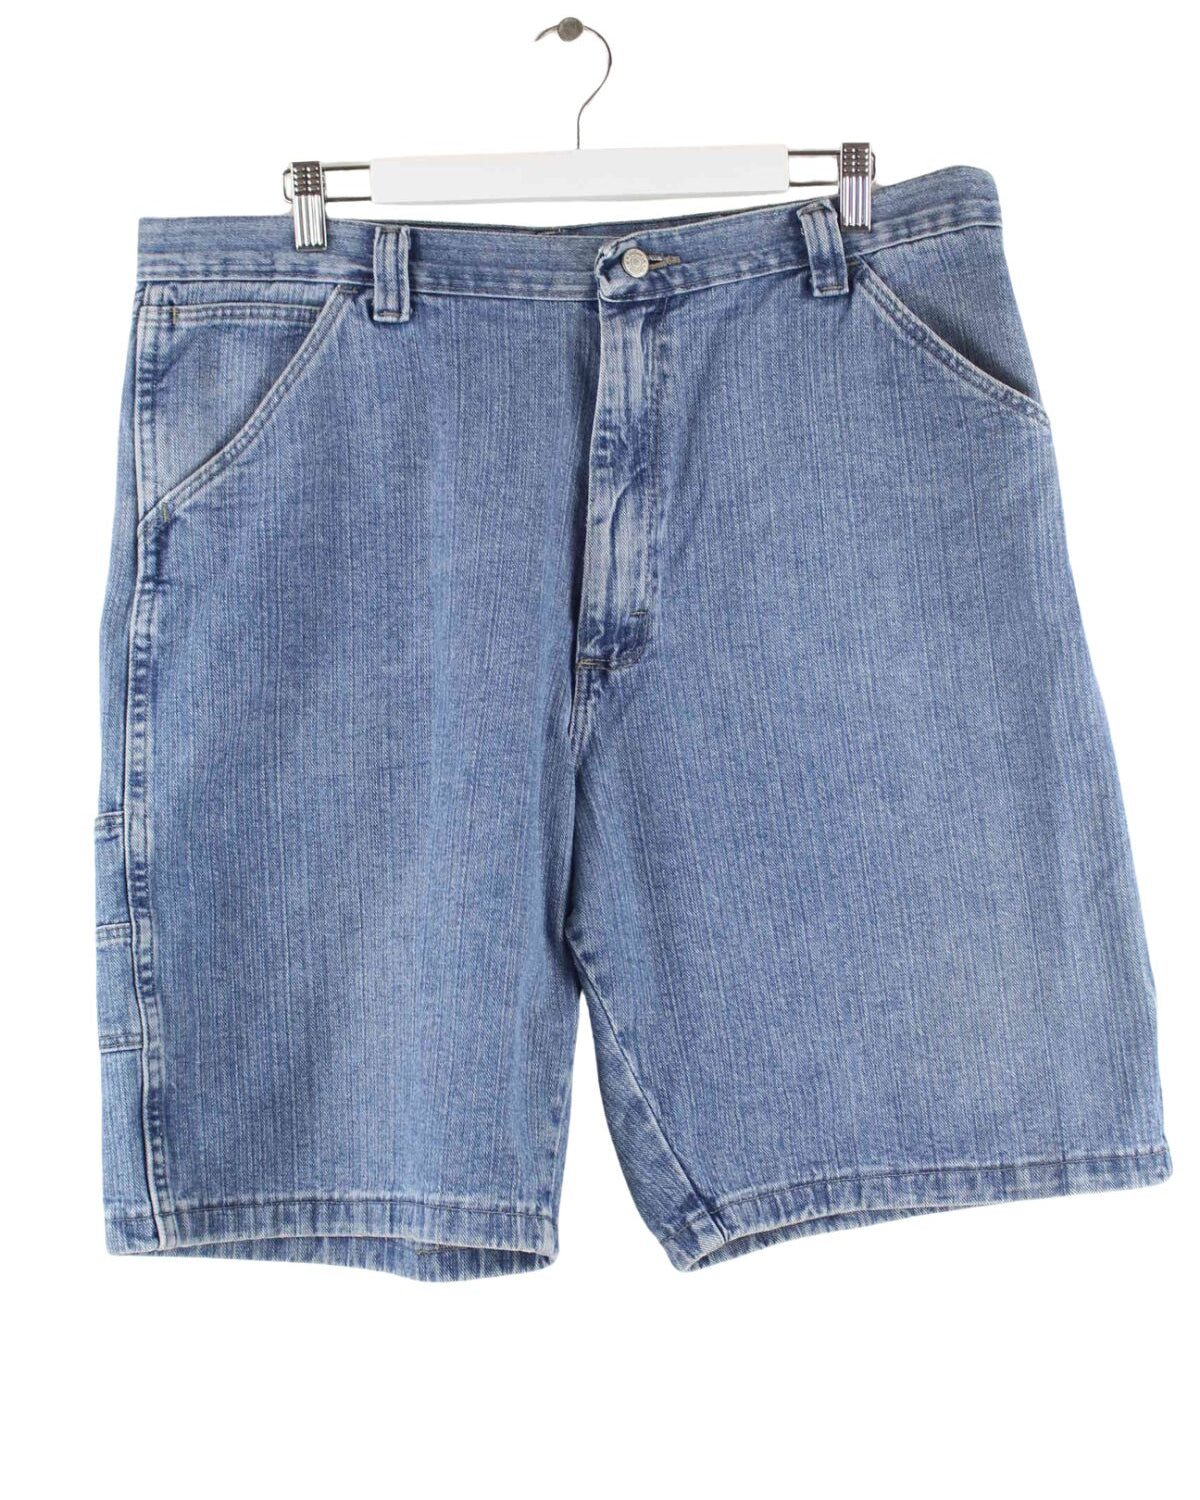 Wrangler y2k Carpenter Jorts / Jeans Shorts Blau W38 (front image)